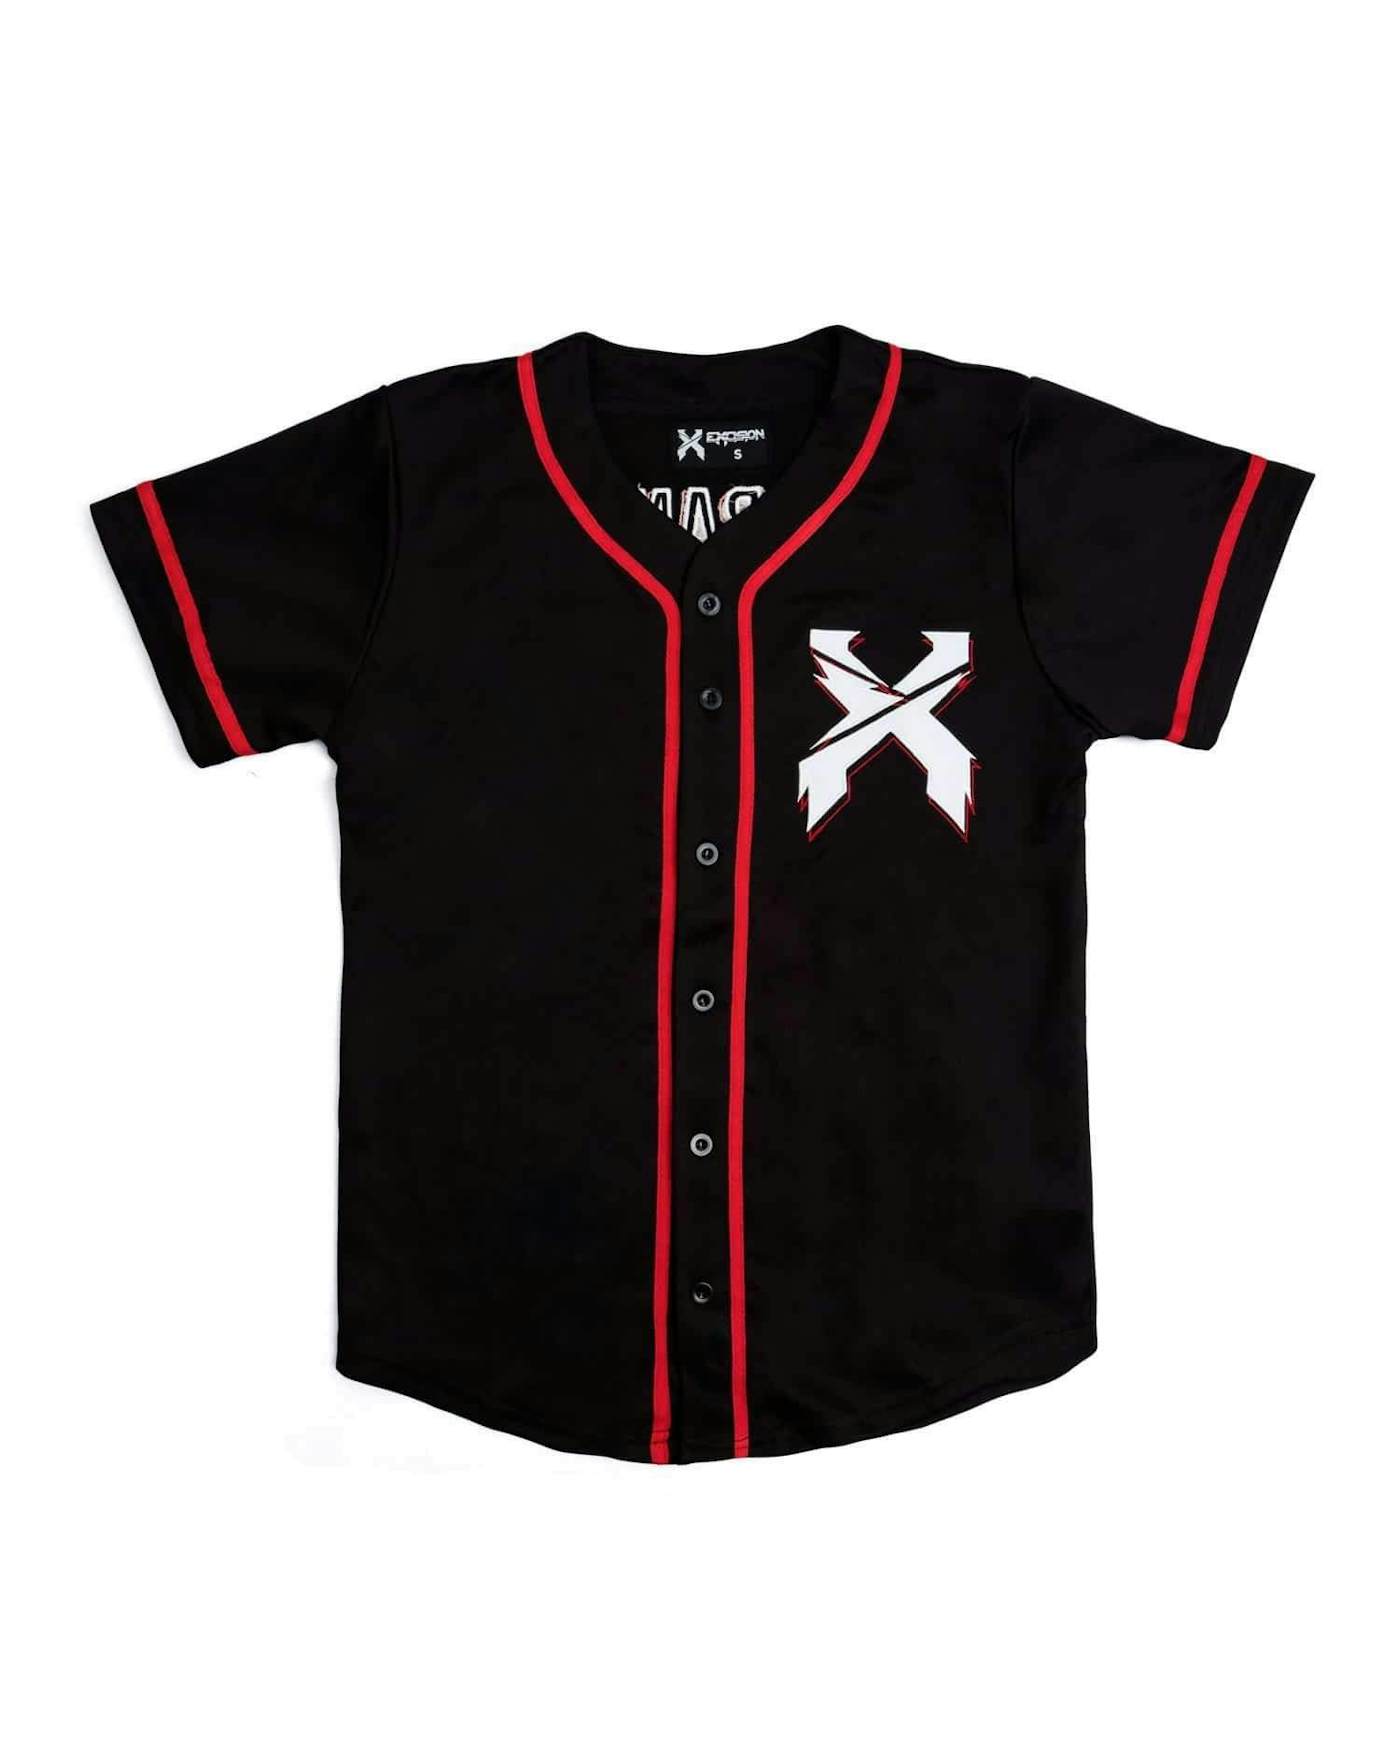 Excision Baseball Jersey (Black/White)